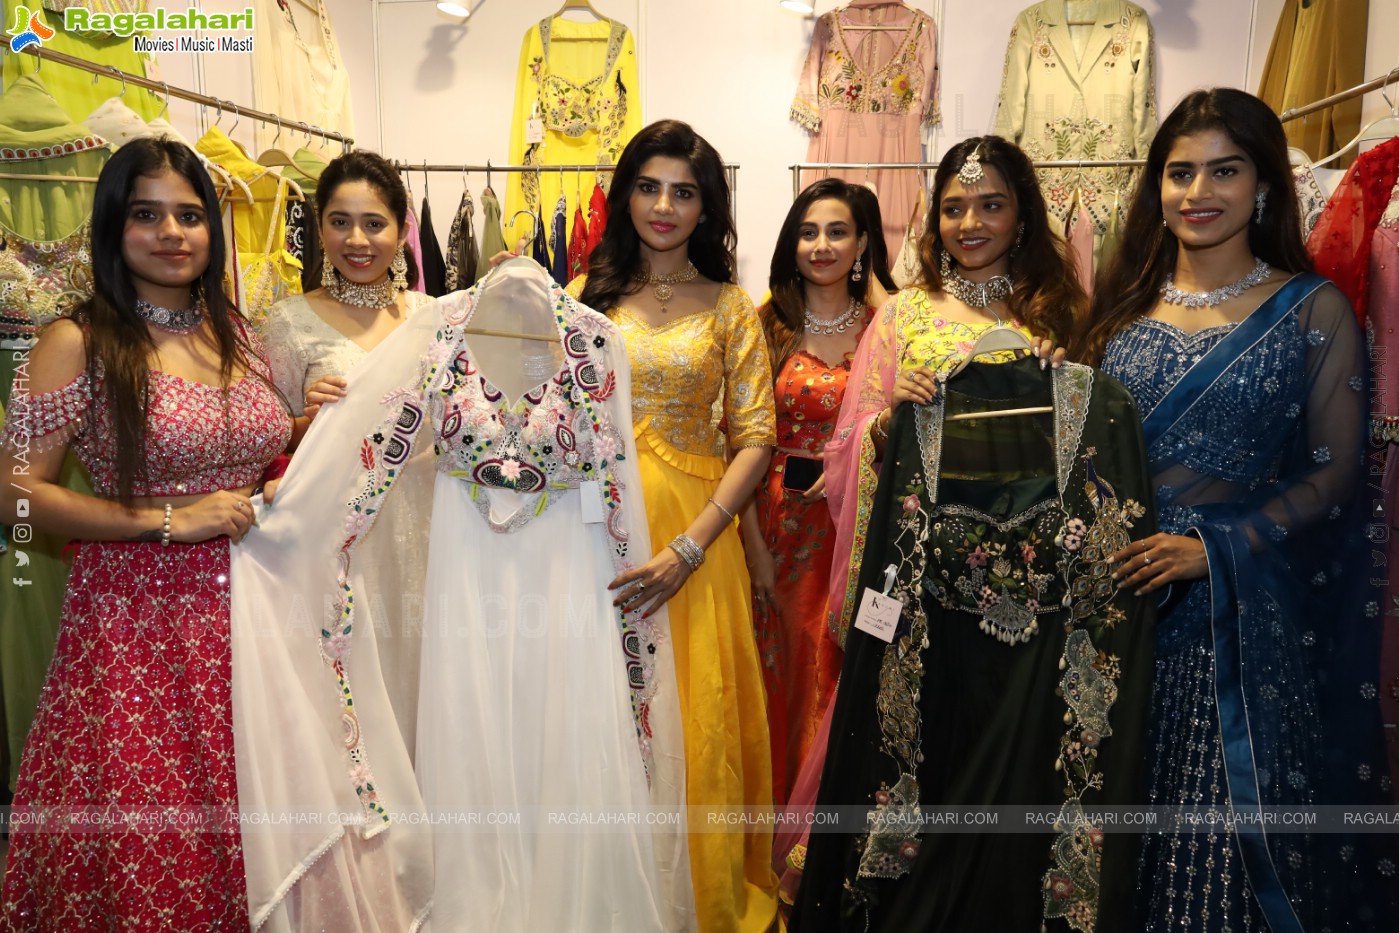 Hi-Life Exhibition Summer Special Fashion Showcase Event, Hyderabad